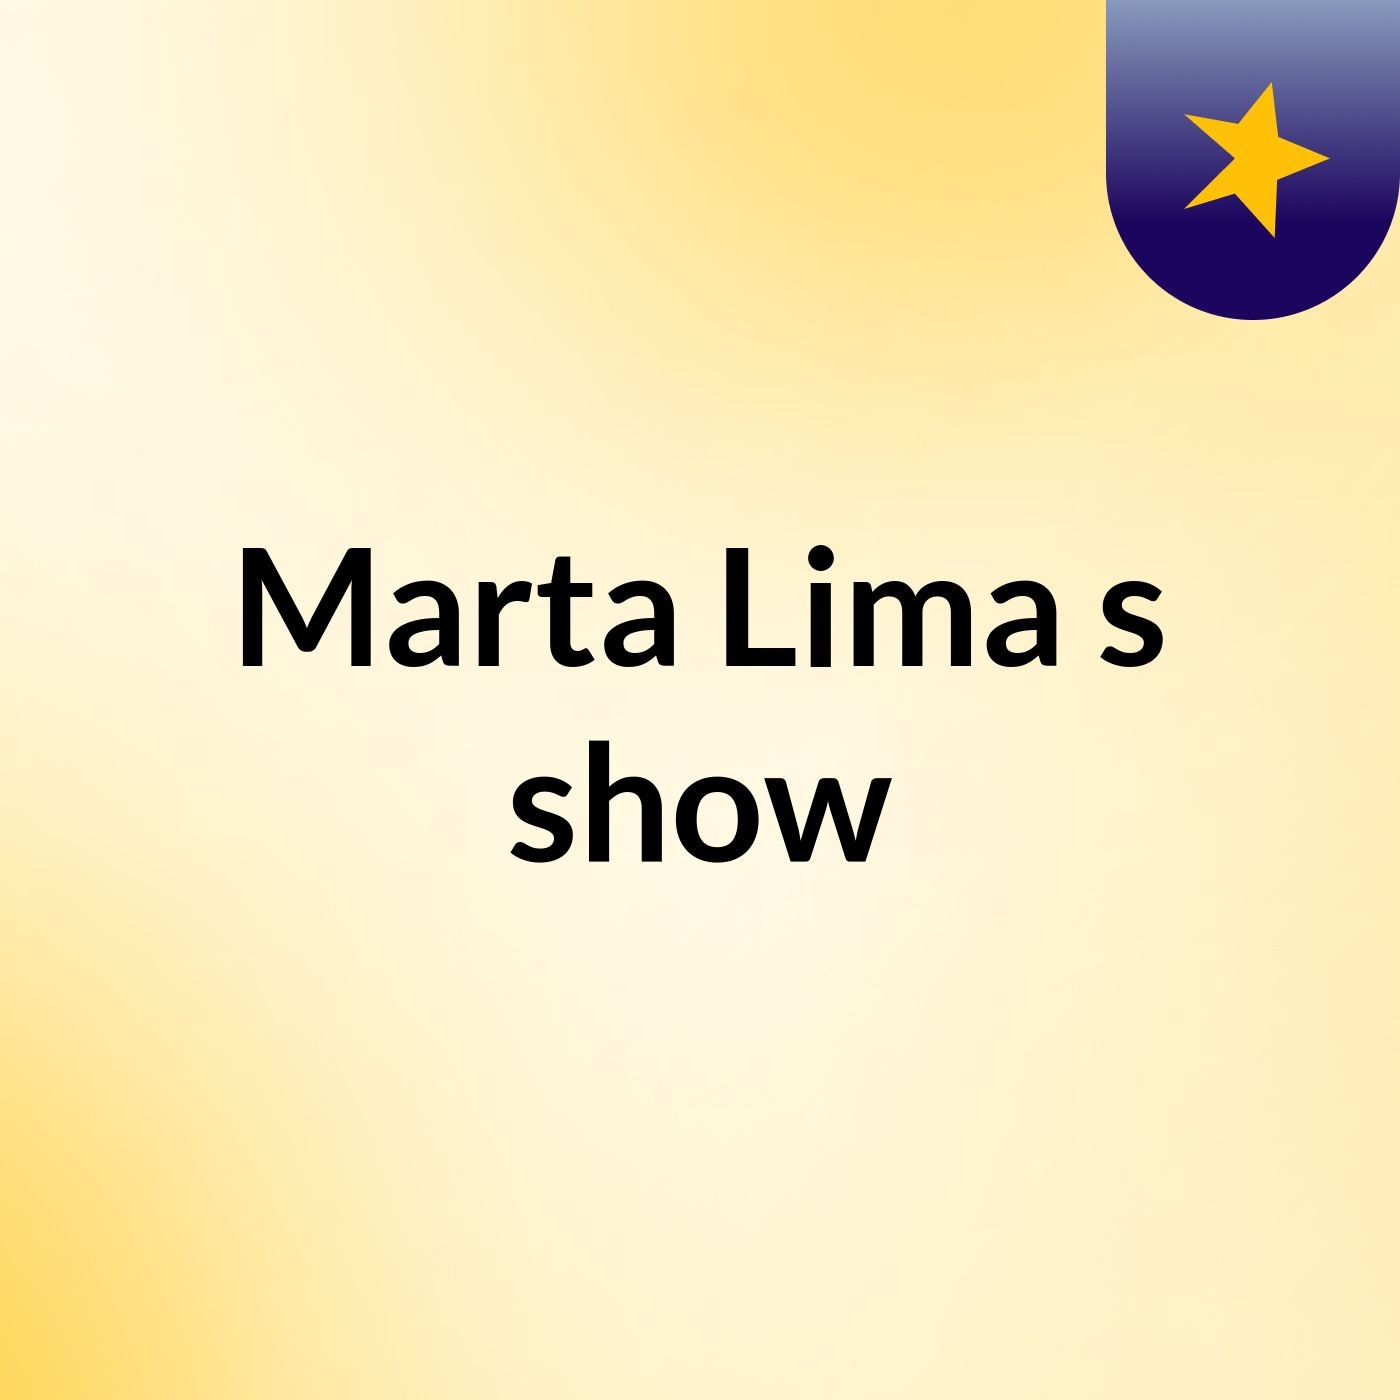 Marta Lima's show